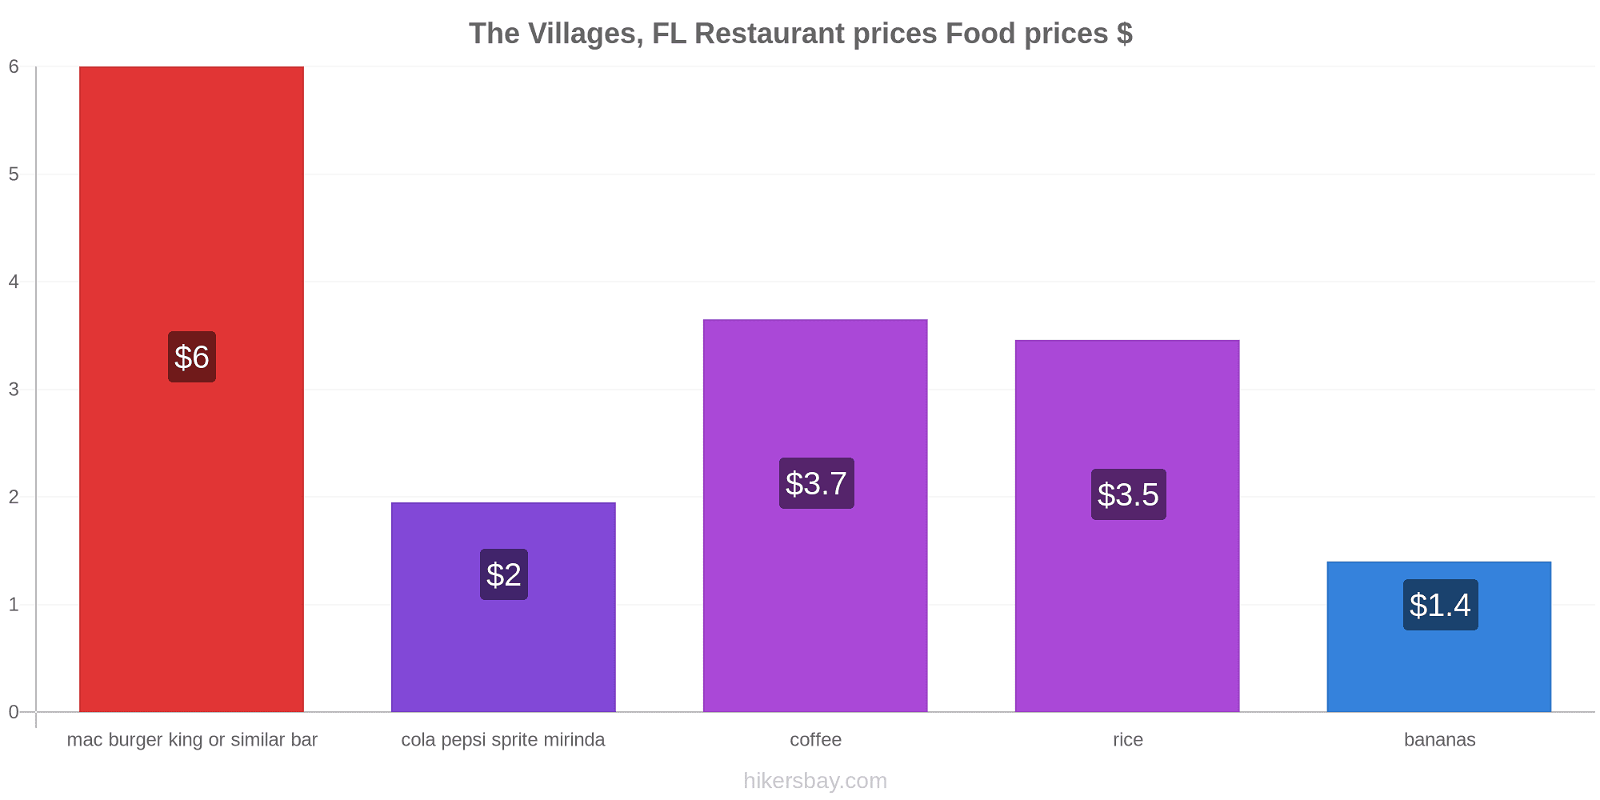 The Villages, FL price changes hikersbay.com